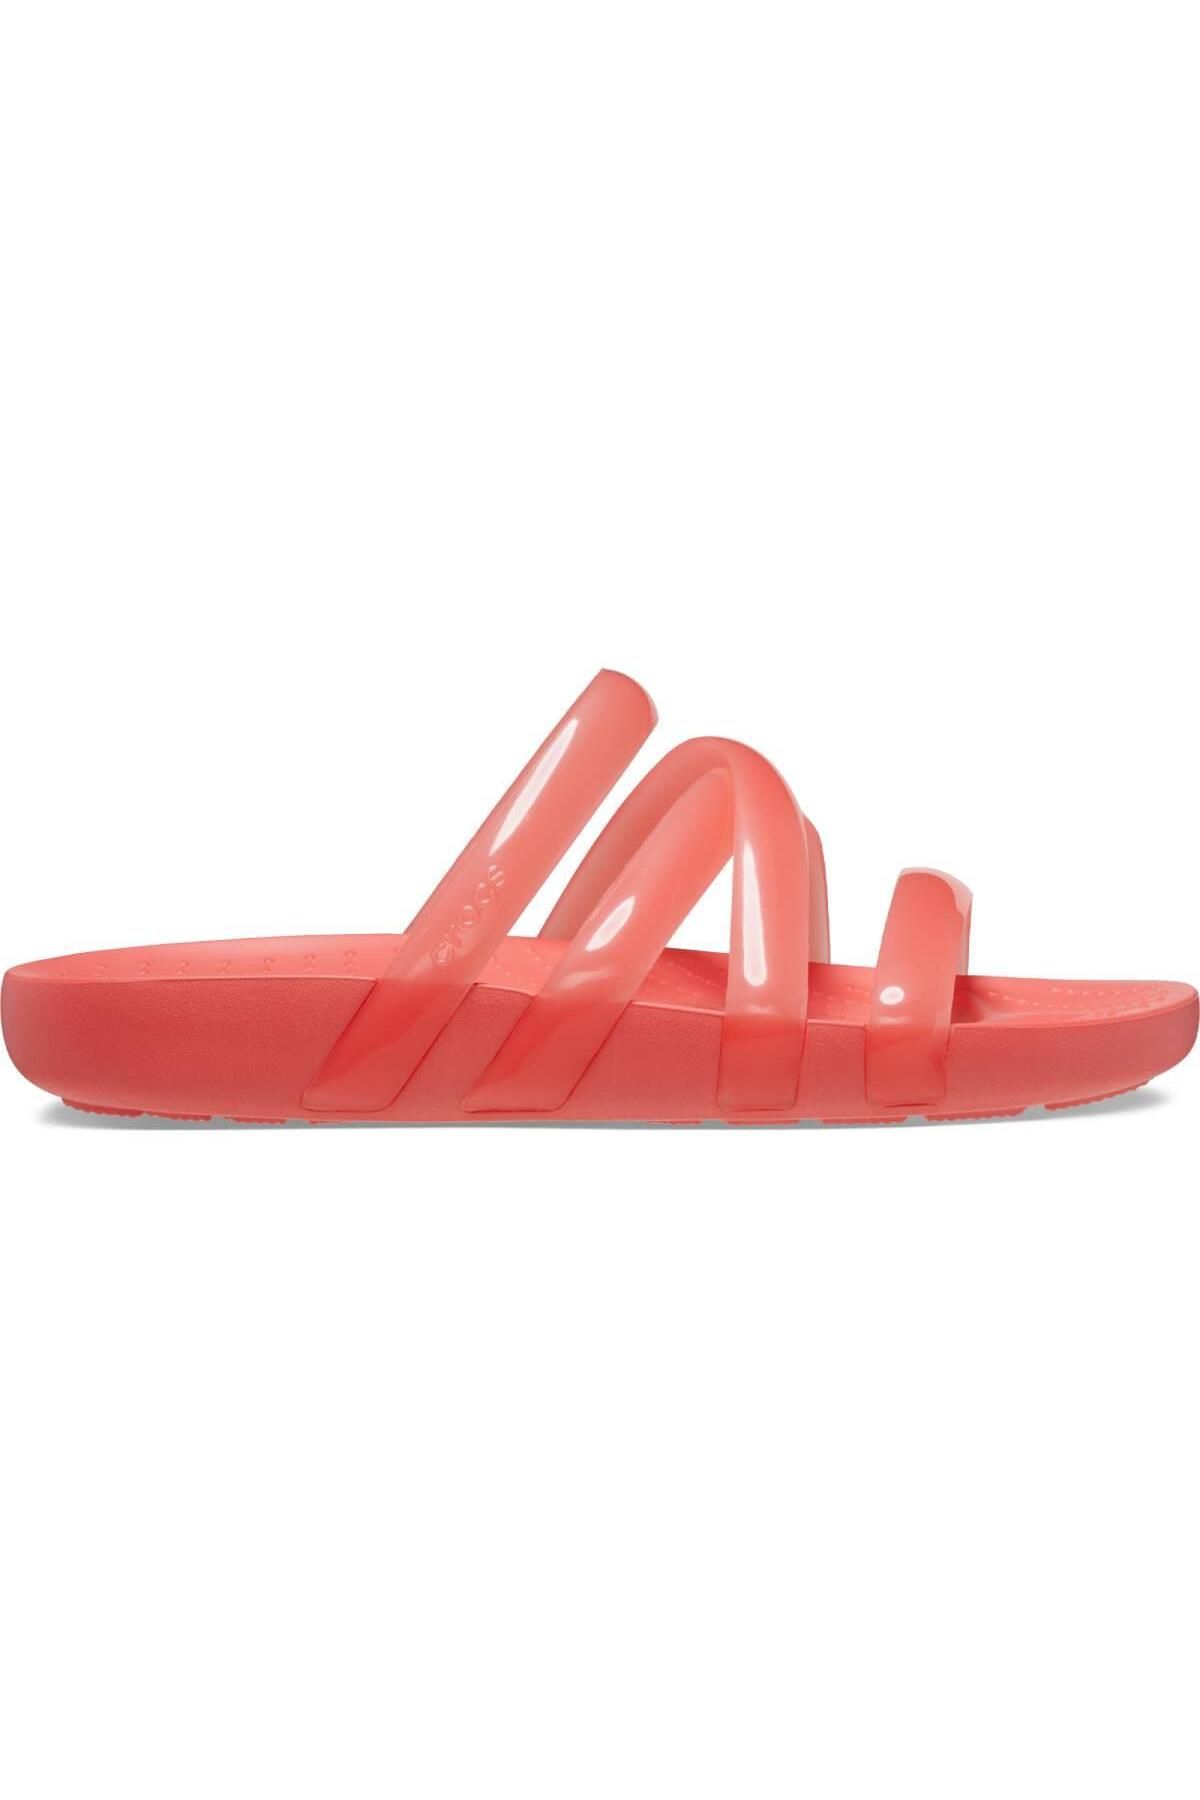 Crocs Splash Glossy Strappy Kadın Terlik 208537-6VT Neon Watermelon